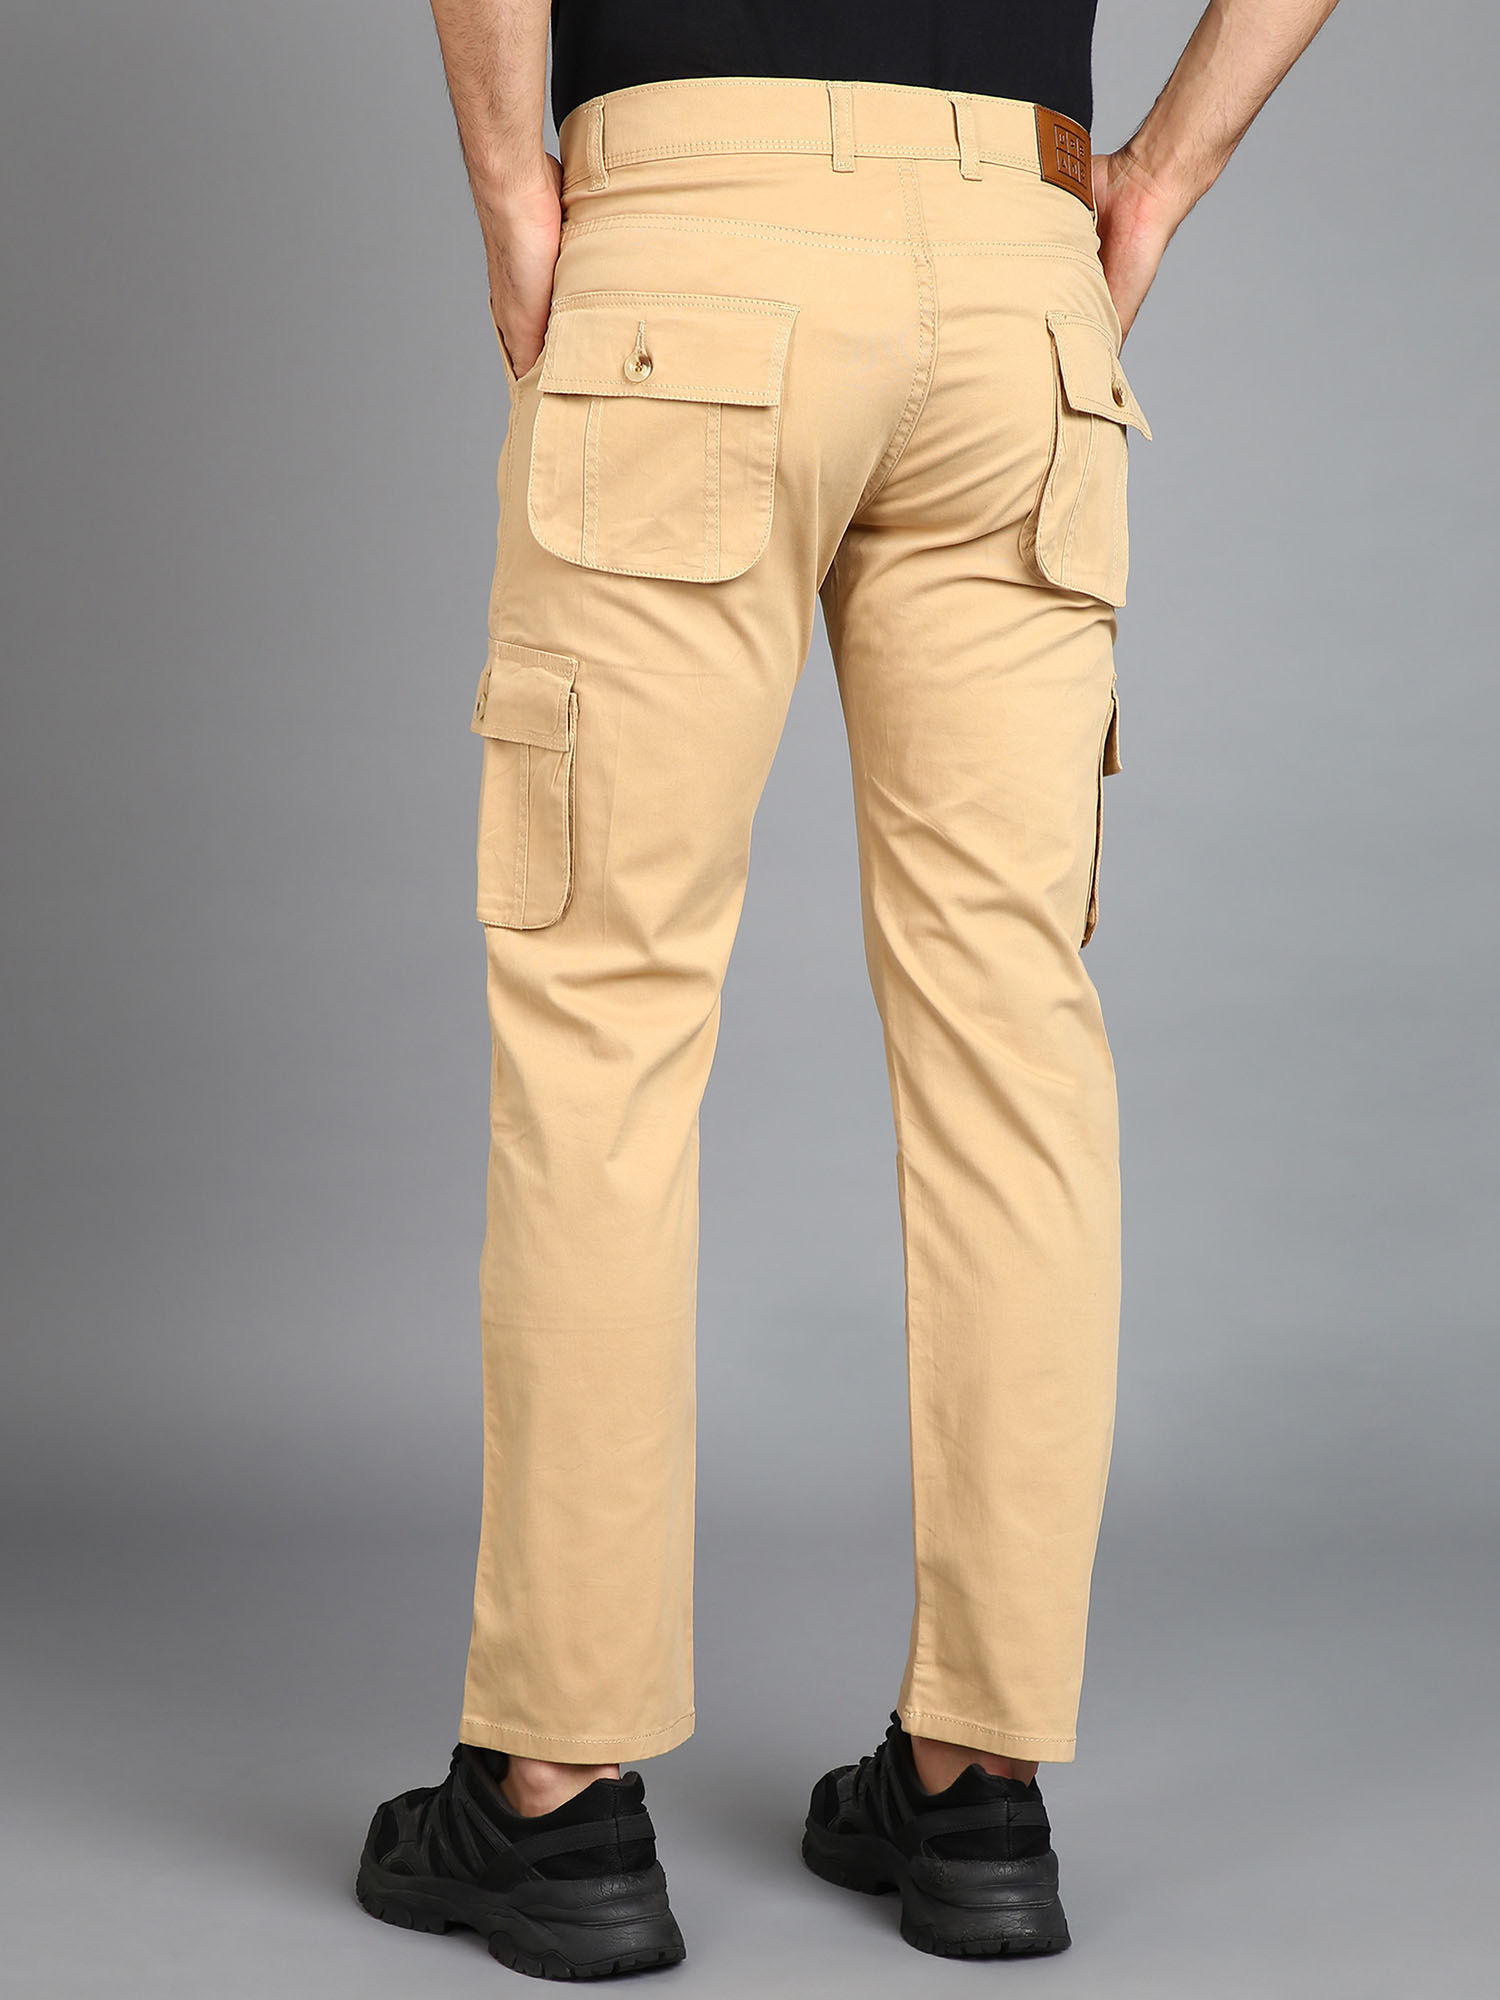 Buy Cargo Sports Men's Regular Fit Cotton Pants (5502 Dark Grey-L_Dark  Grey_L) at Amazon.in